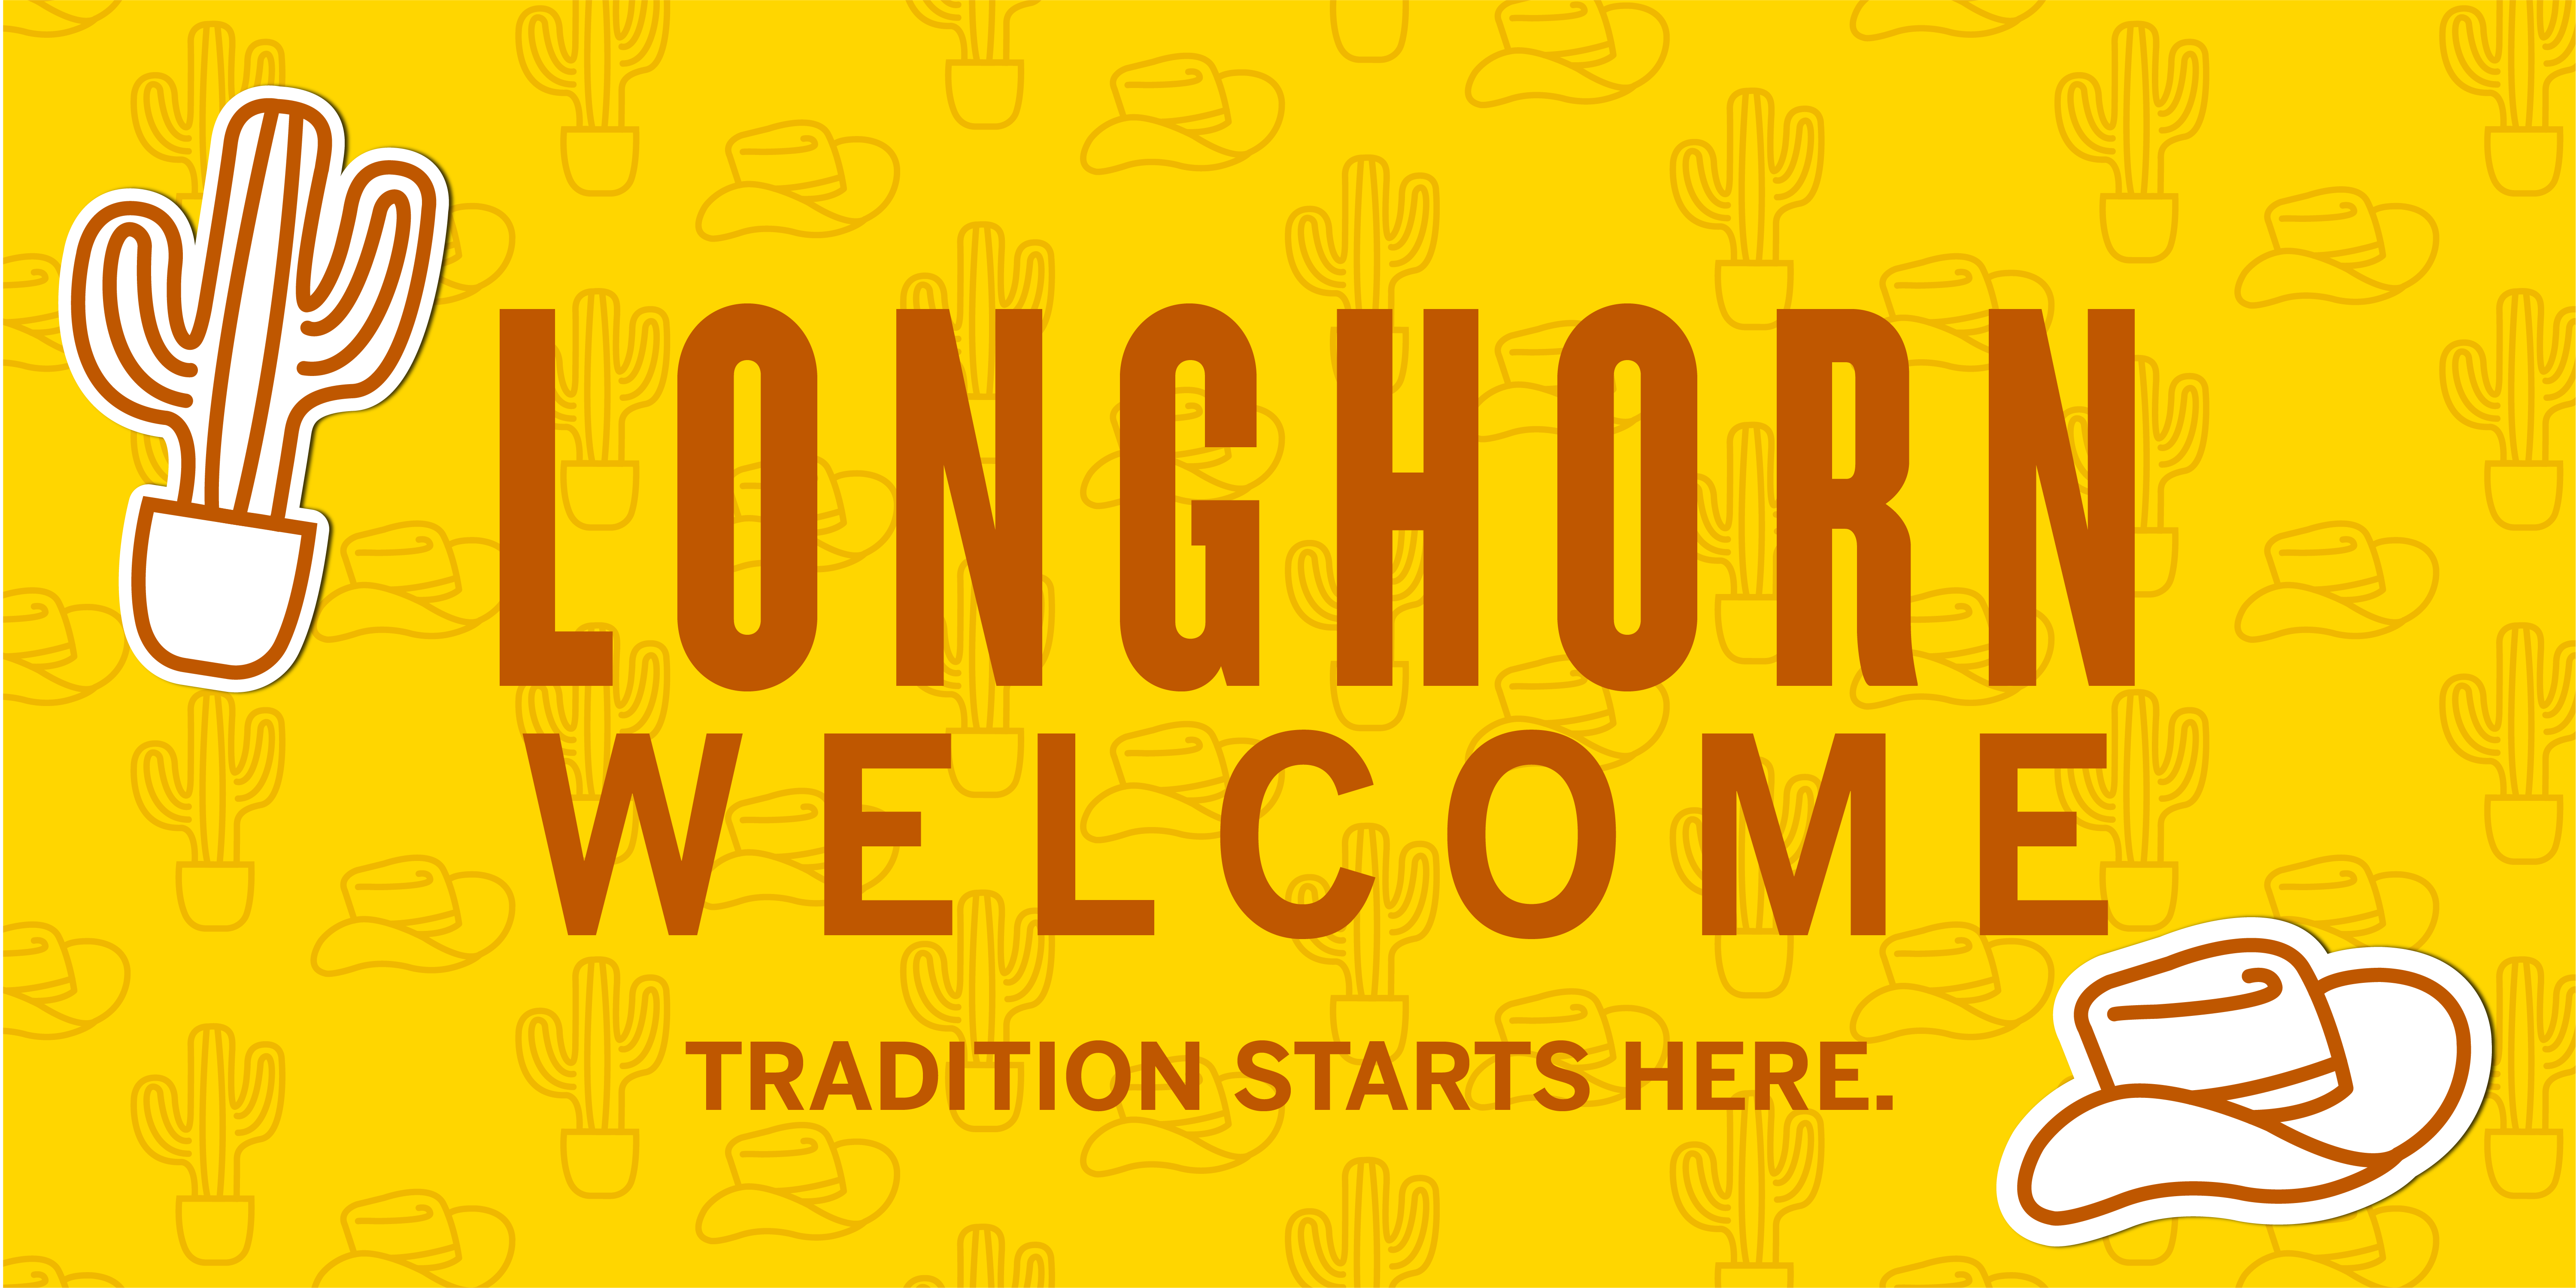 Longhorn Welcome Website Header